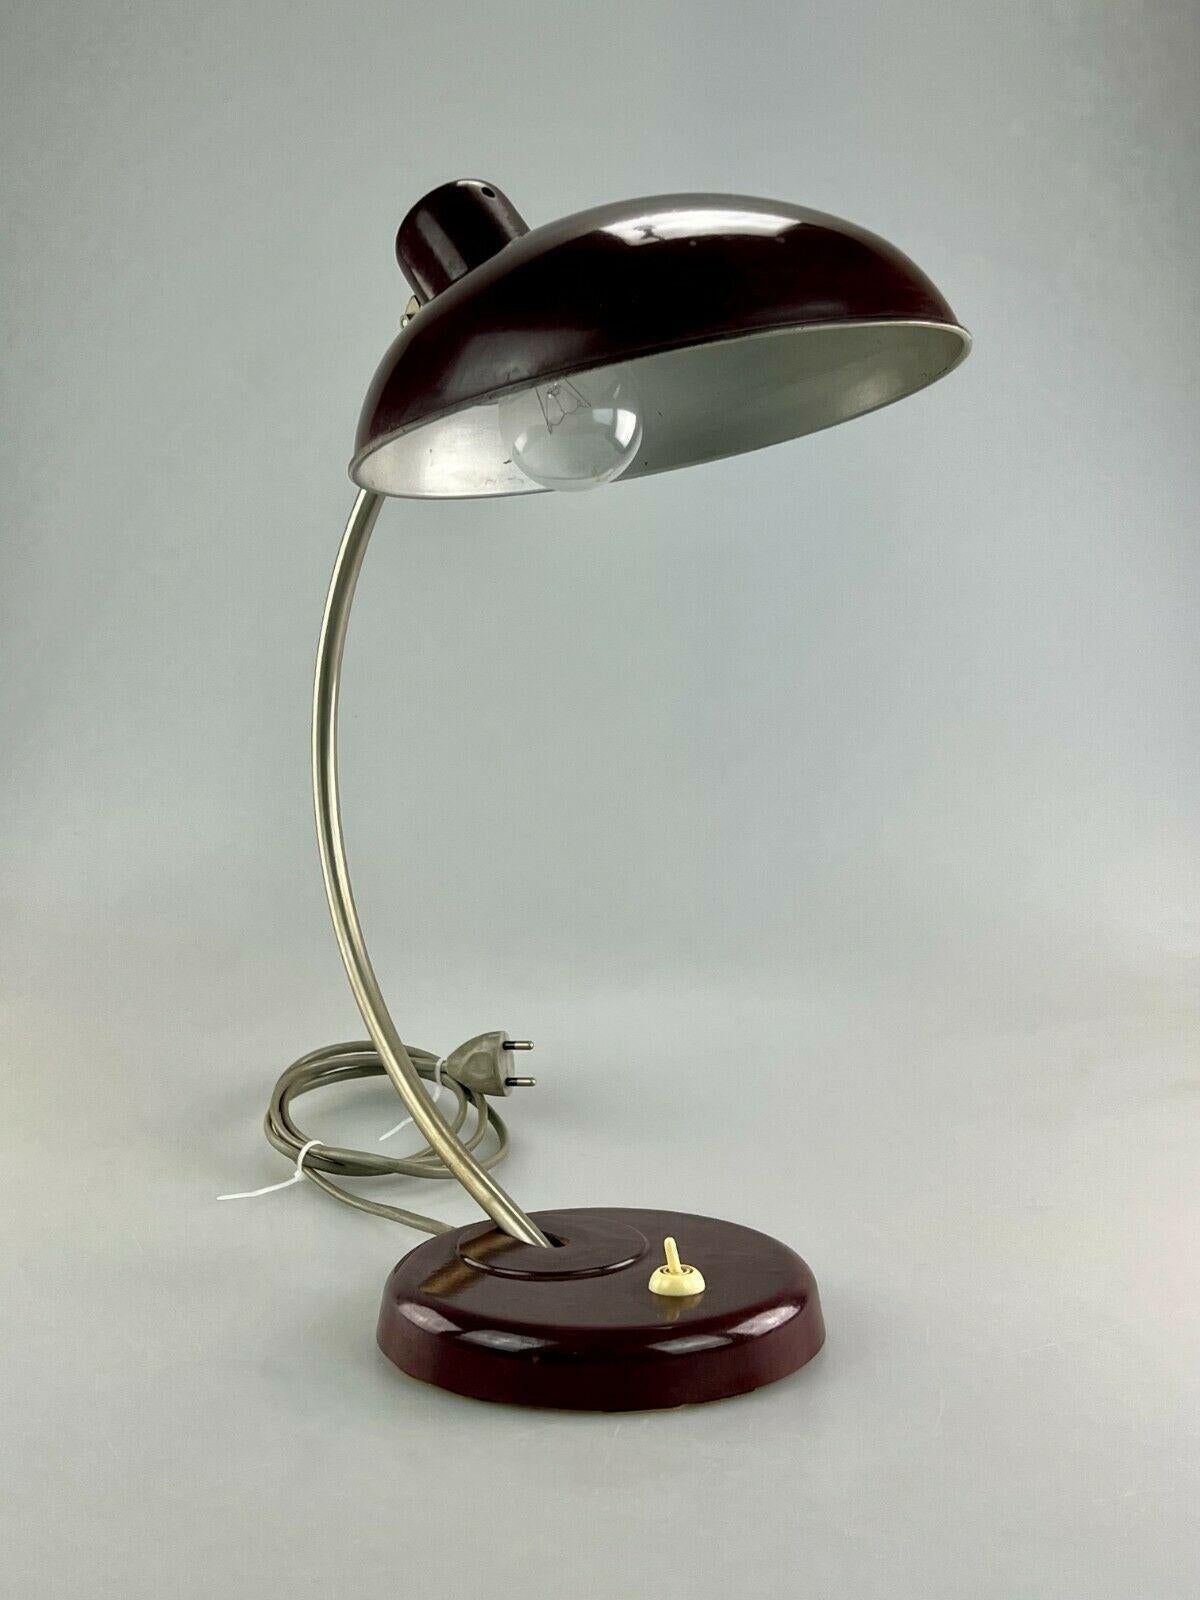 1950s 1960s lamp desk lamp Helion Arnstadt VEB Leuchtenbau

Object: table lamp

Manufacturer: VEB

Condition: good - vintage

Age: around 1960-1970

Dimensions:

34cm x 24.5cm x 48cm

Other notes:

The pictures serve as part of the